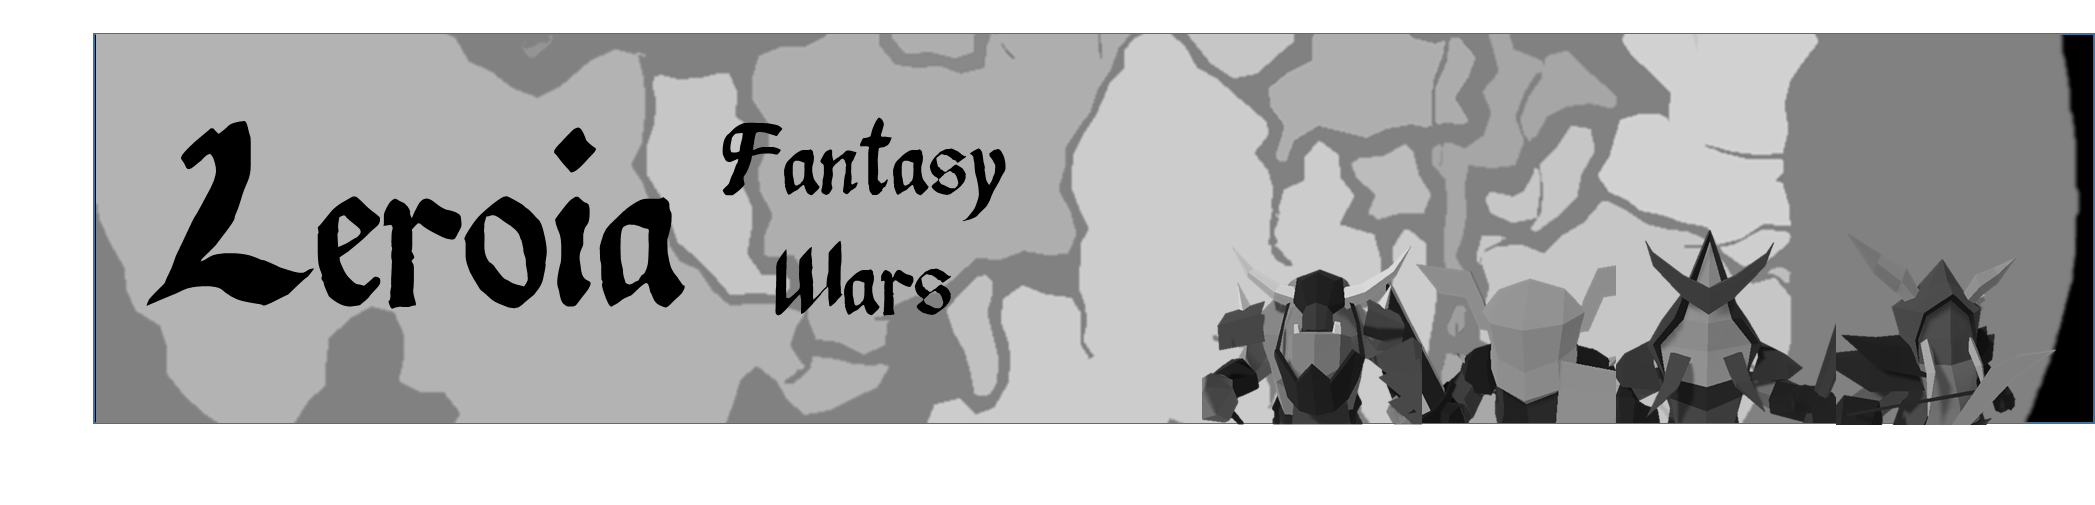 Leroia: Fantasy Wars